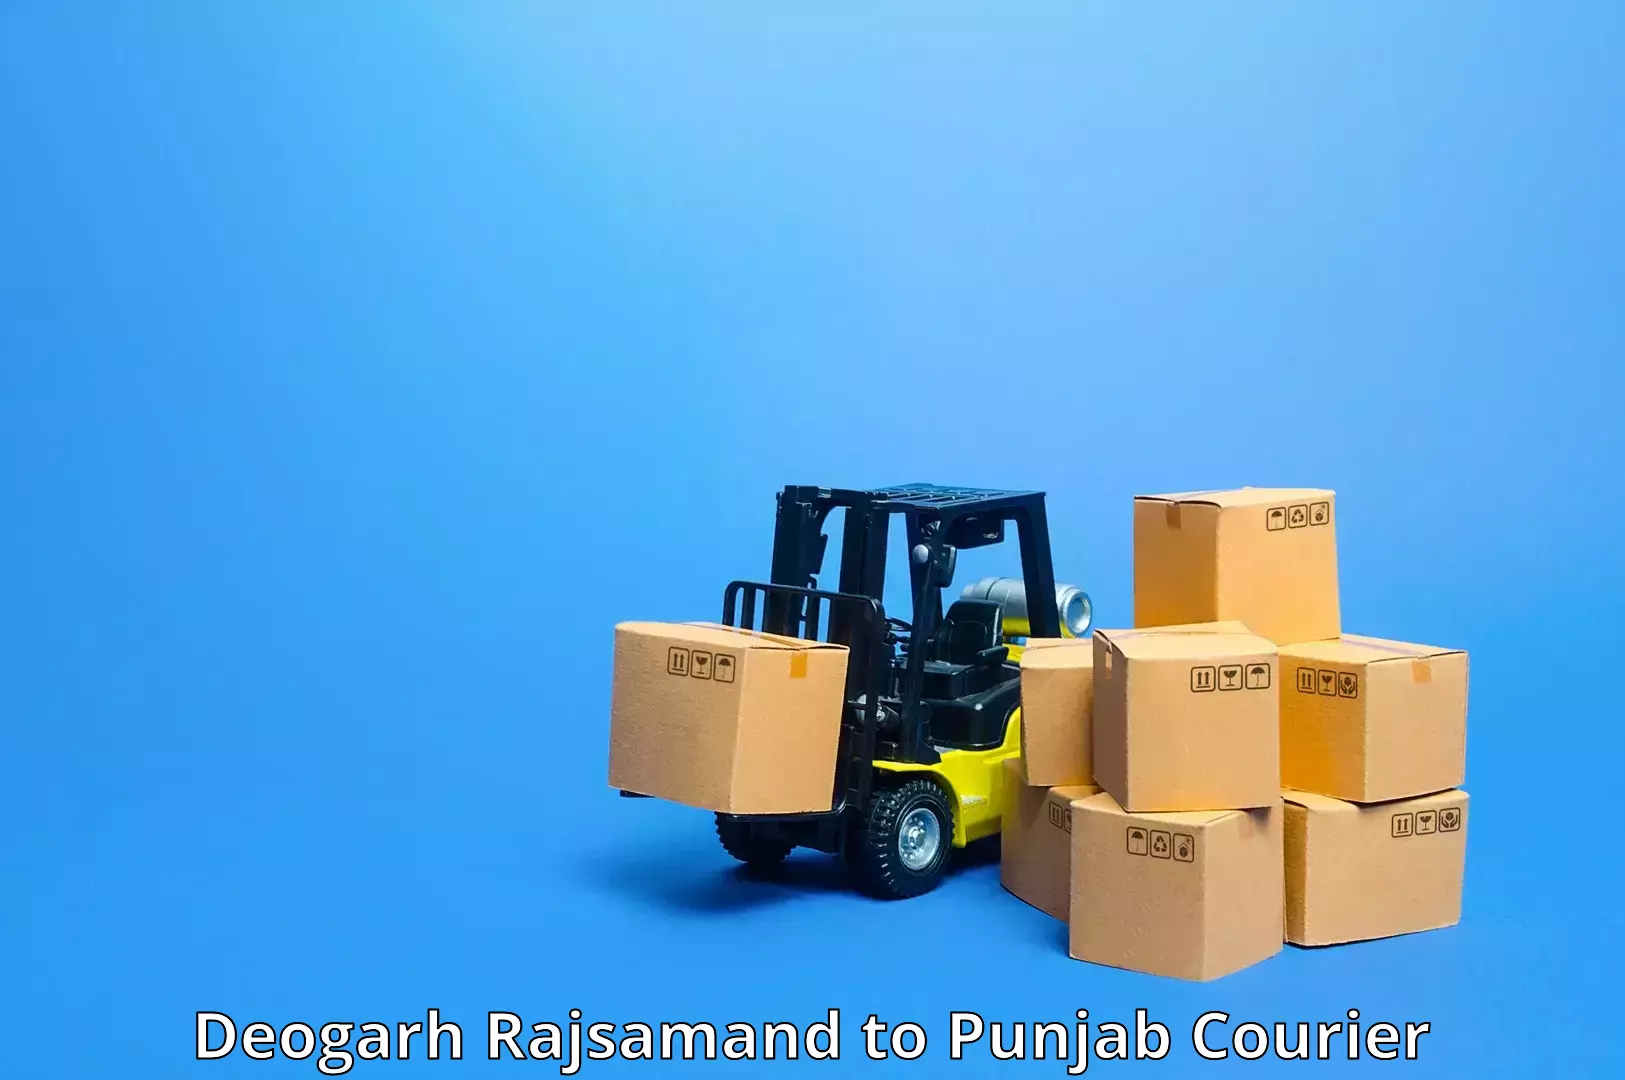 24-hour courier service Deogarh Rajsamand to Punjab